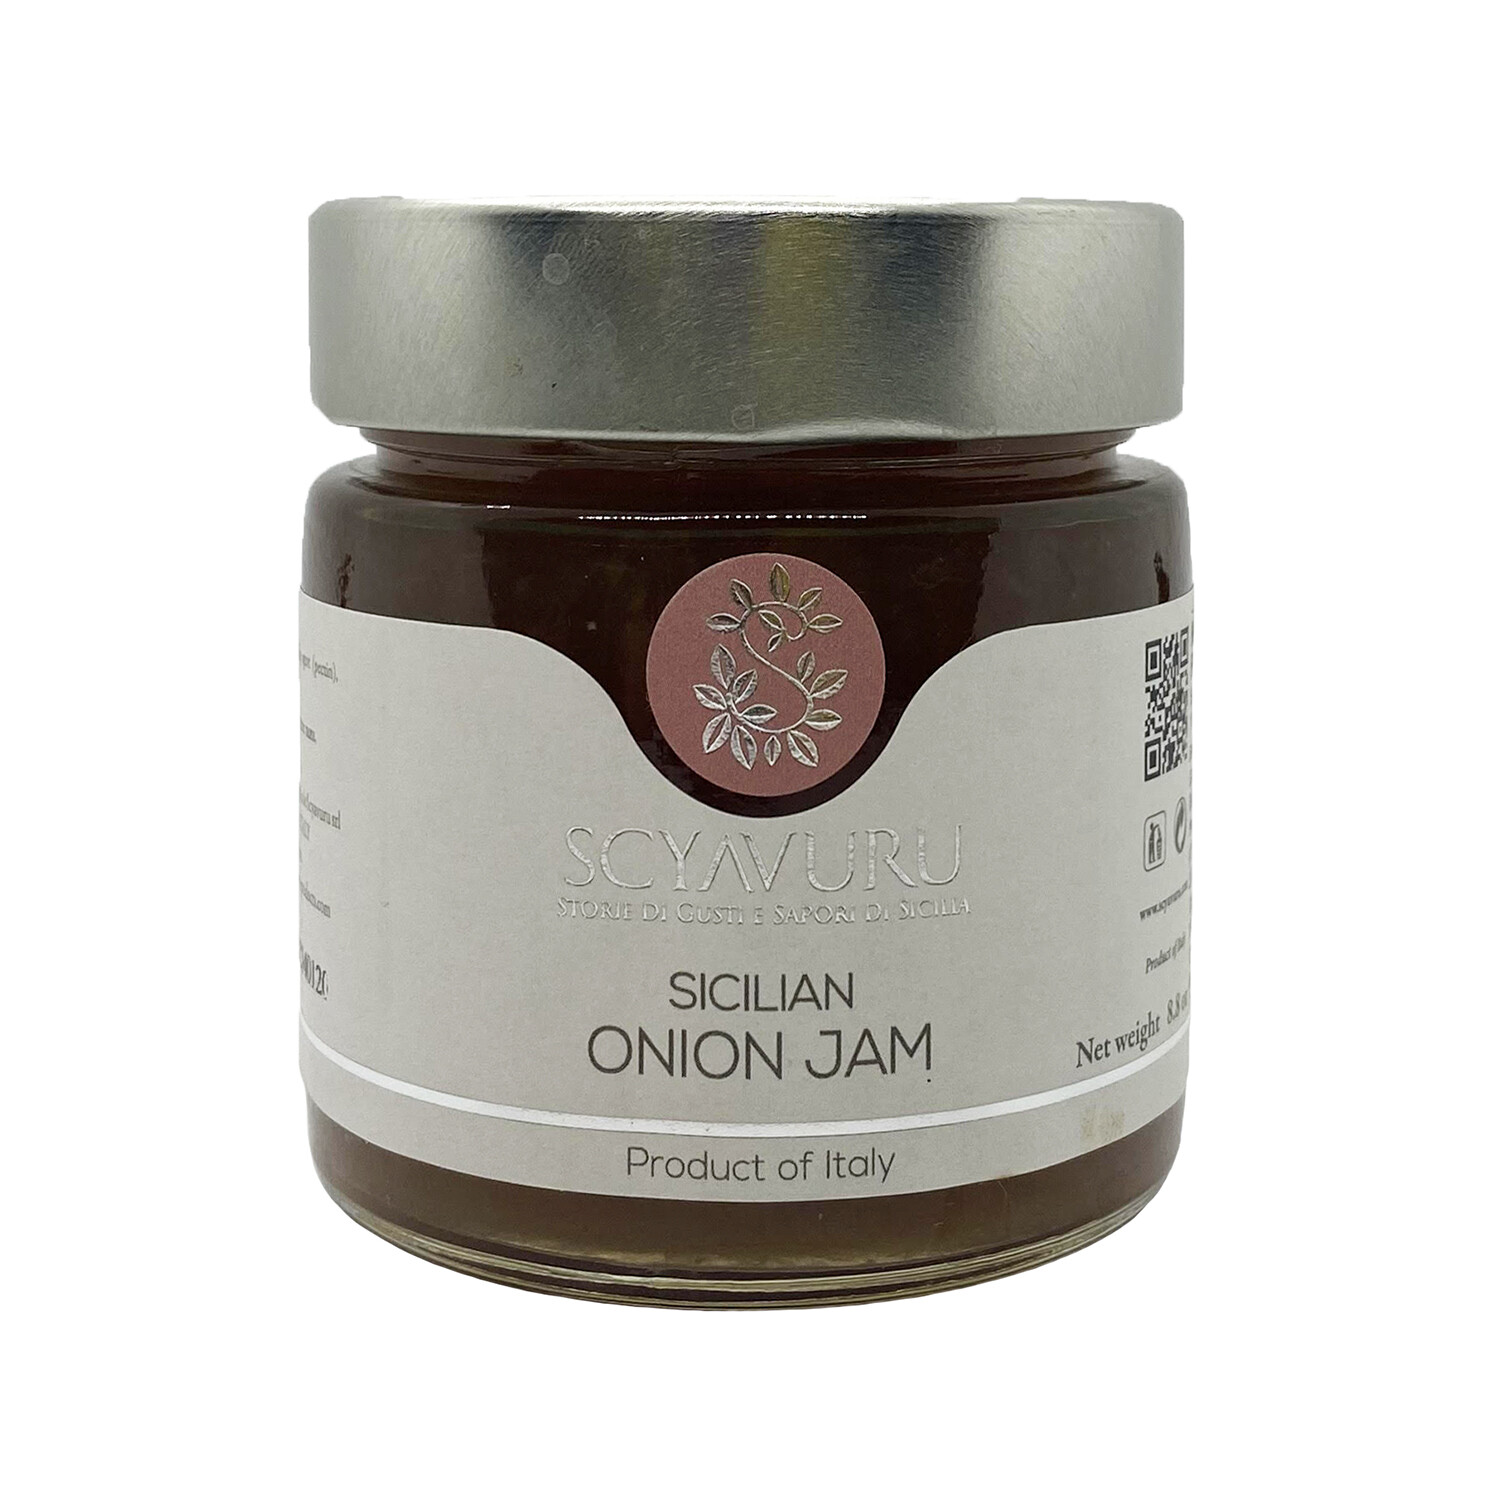 Scyavuru Sicilian Onion Jam Italy 8.8oz